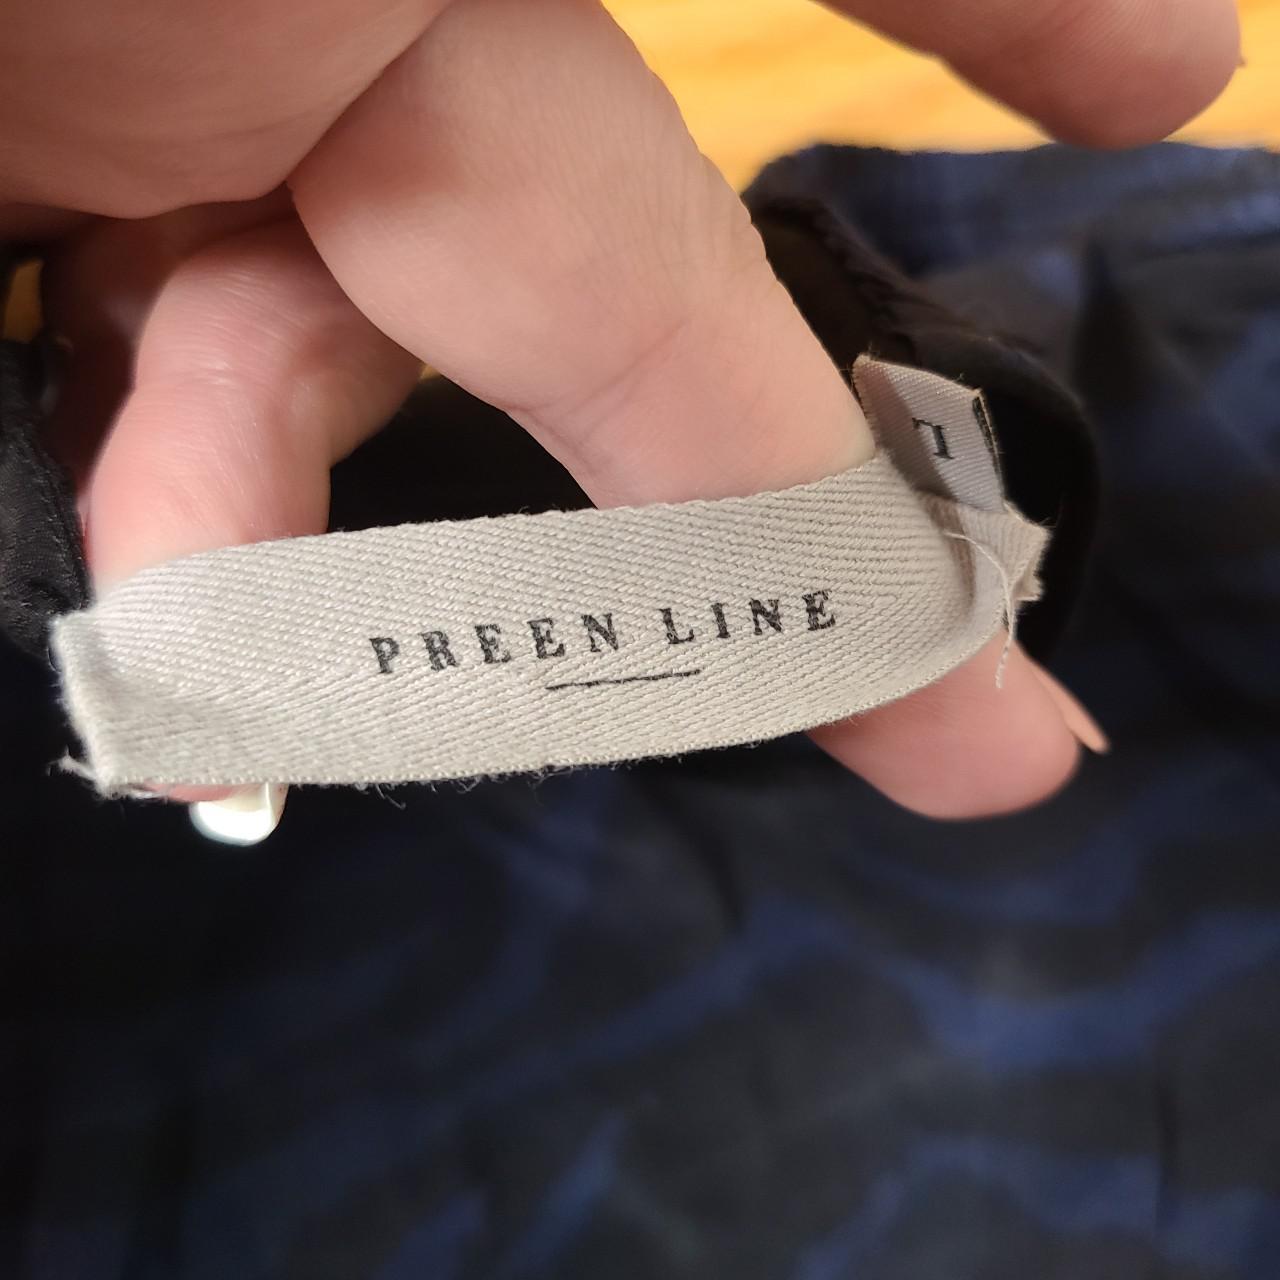 Product Image 4 - Preen Line Peplum Blouse
Size Large
Blue